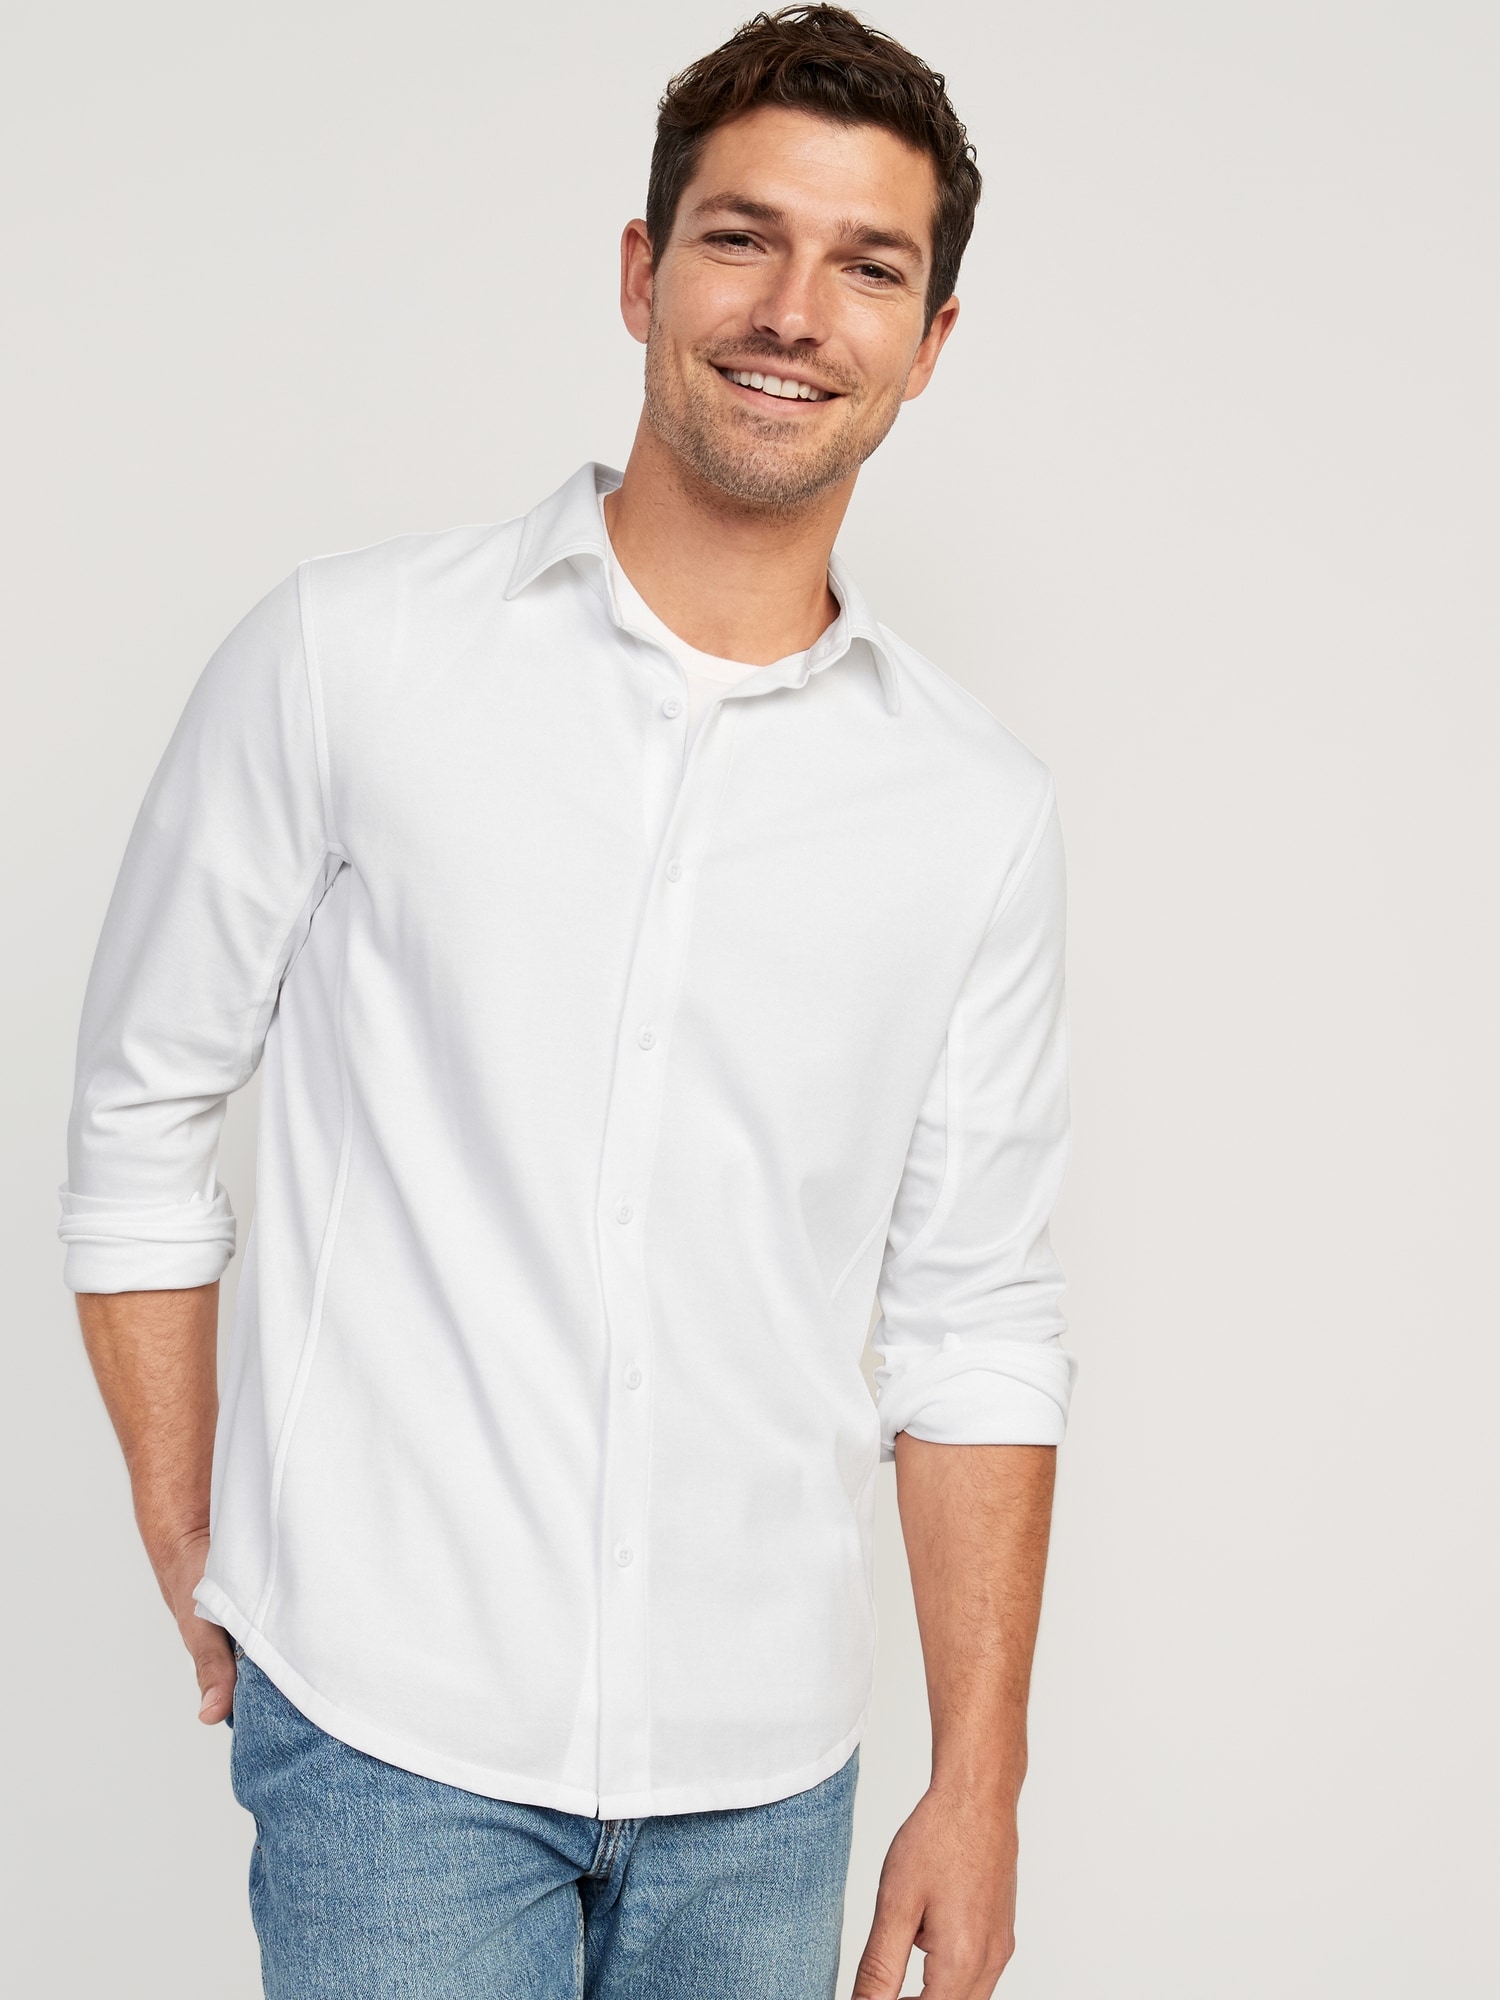 Old Navy Slim-Fit Go-Fresh Odor-Control Performance Shirt for Men white. 1